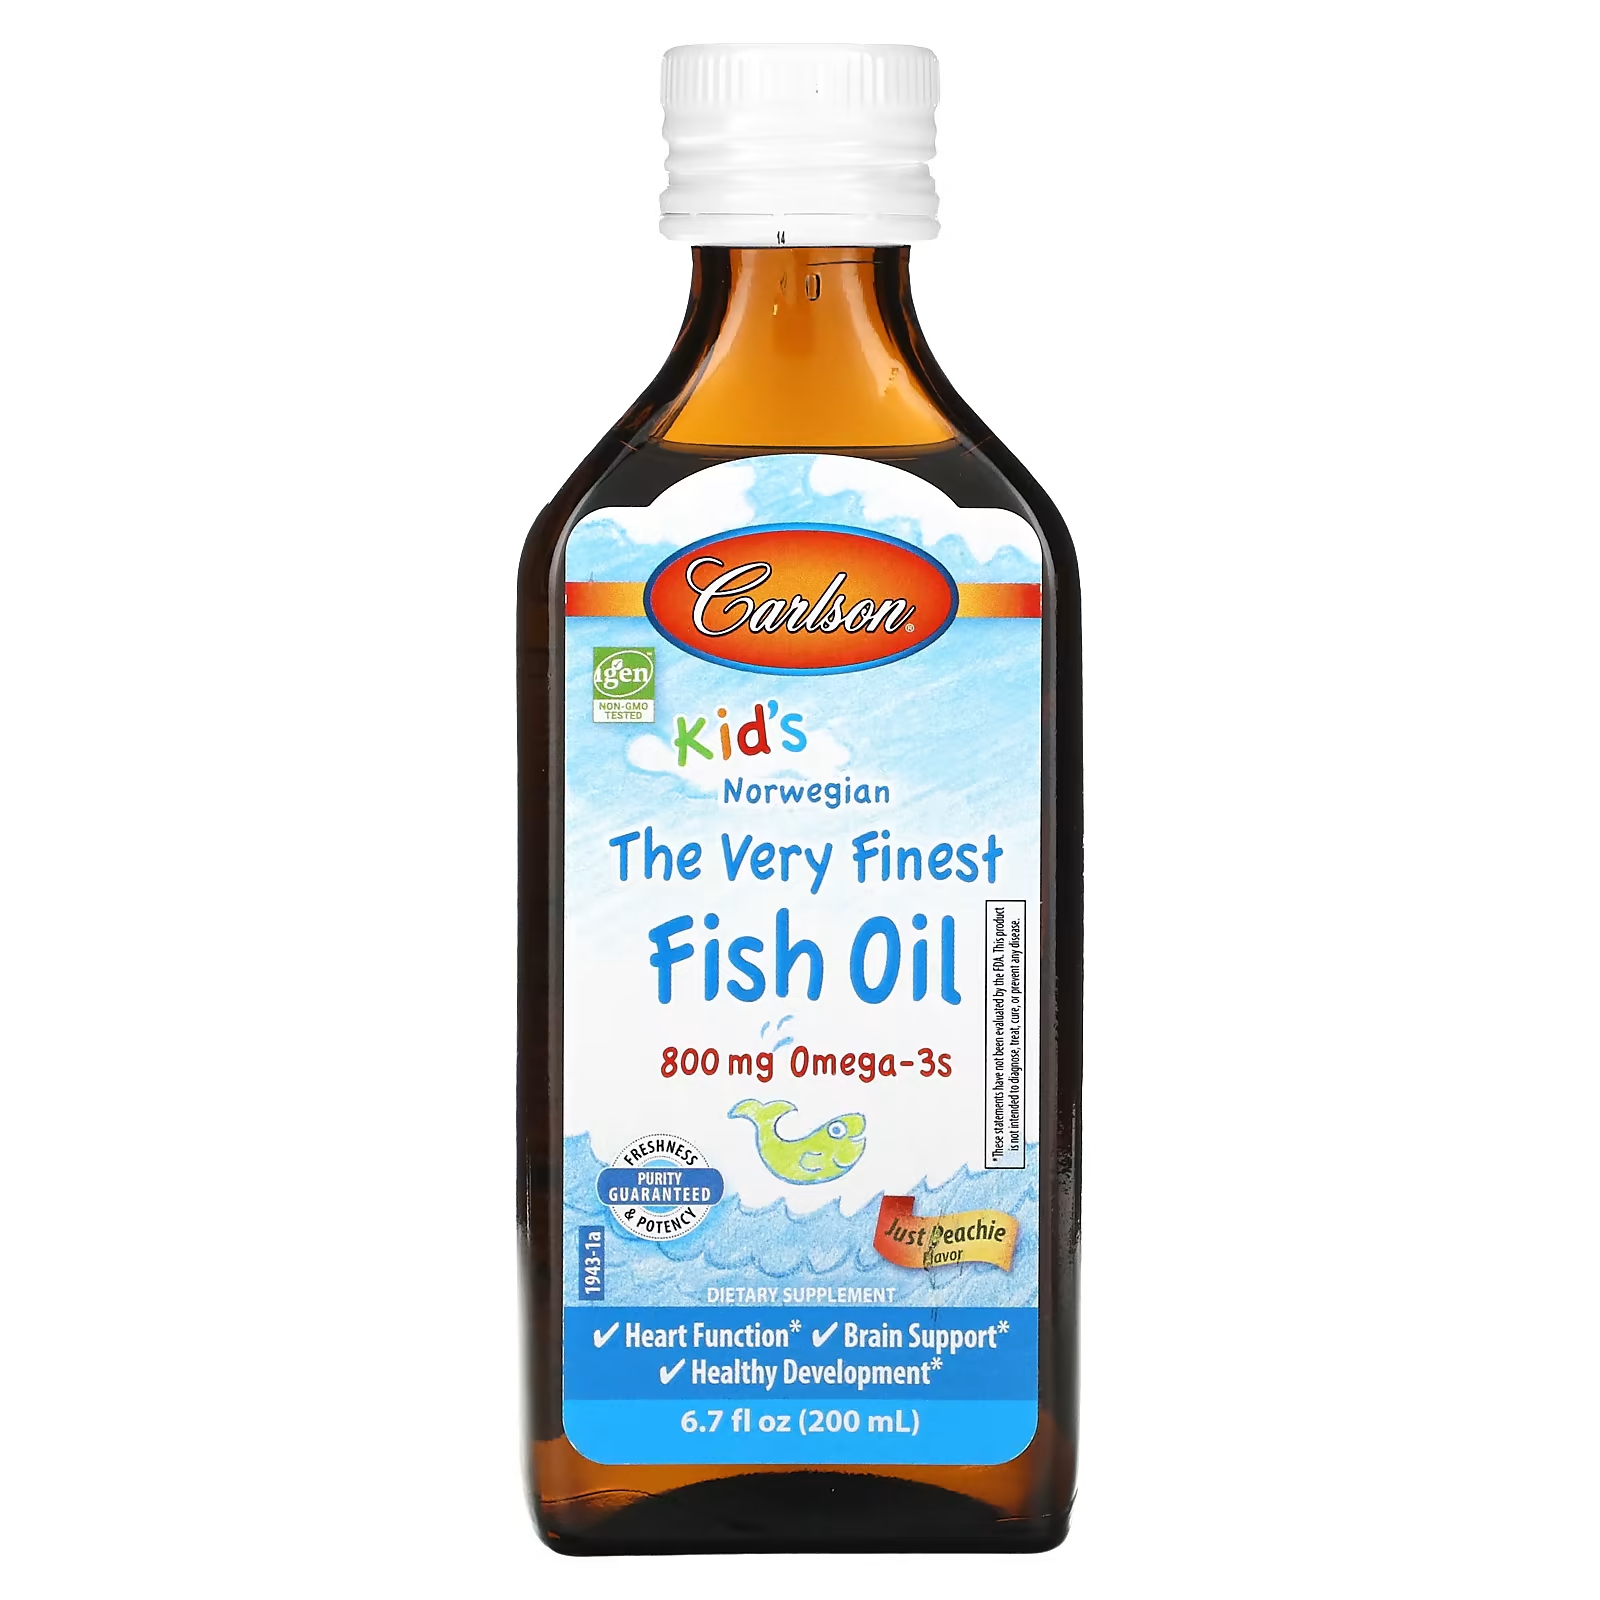 Carlson Kid's норвежский рыбий жир The Very Finest Just Peachie, 800 мг, 6,7 жидких унций (200 мл)